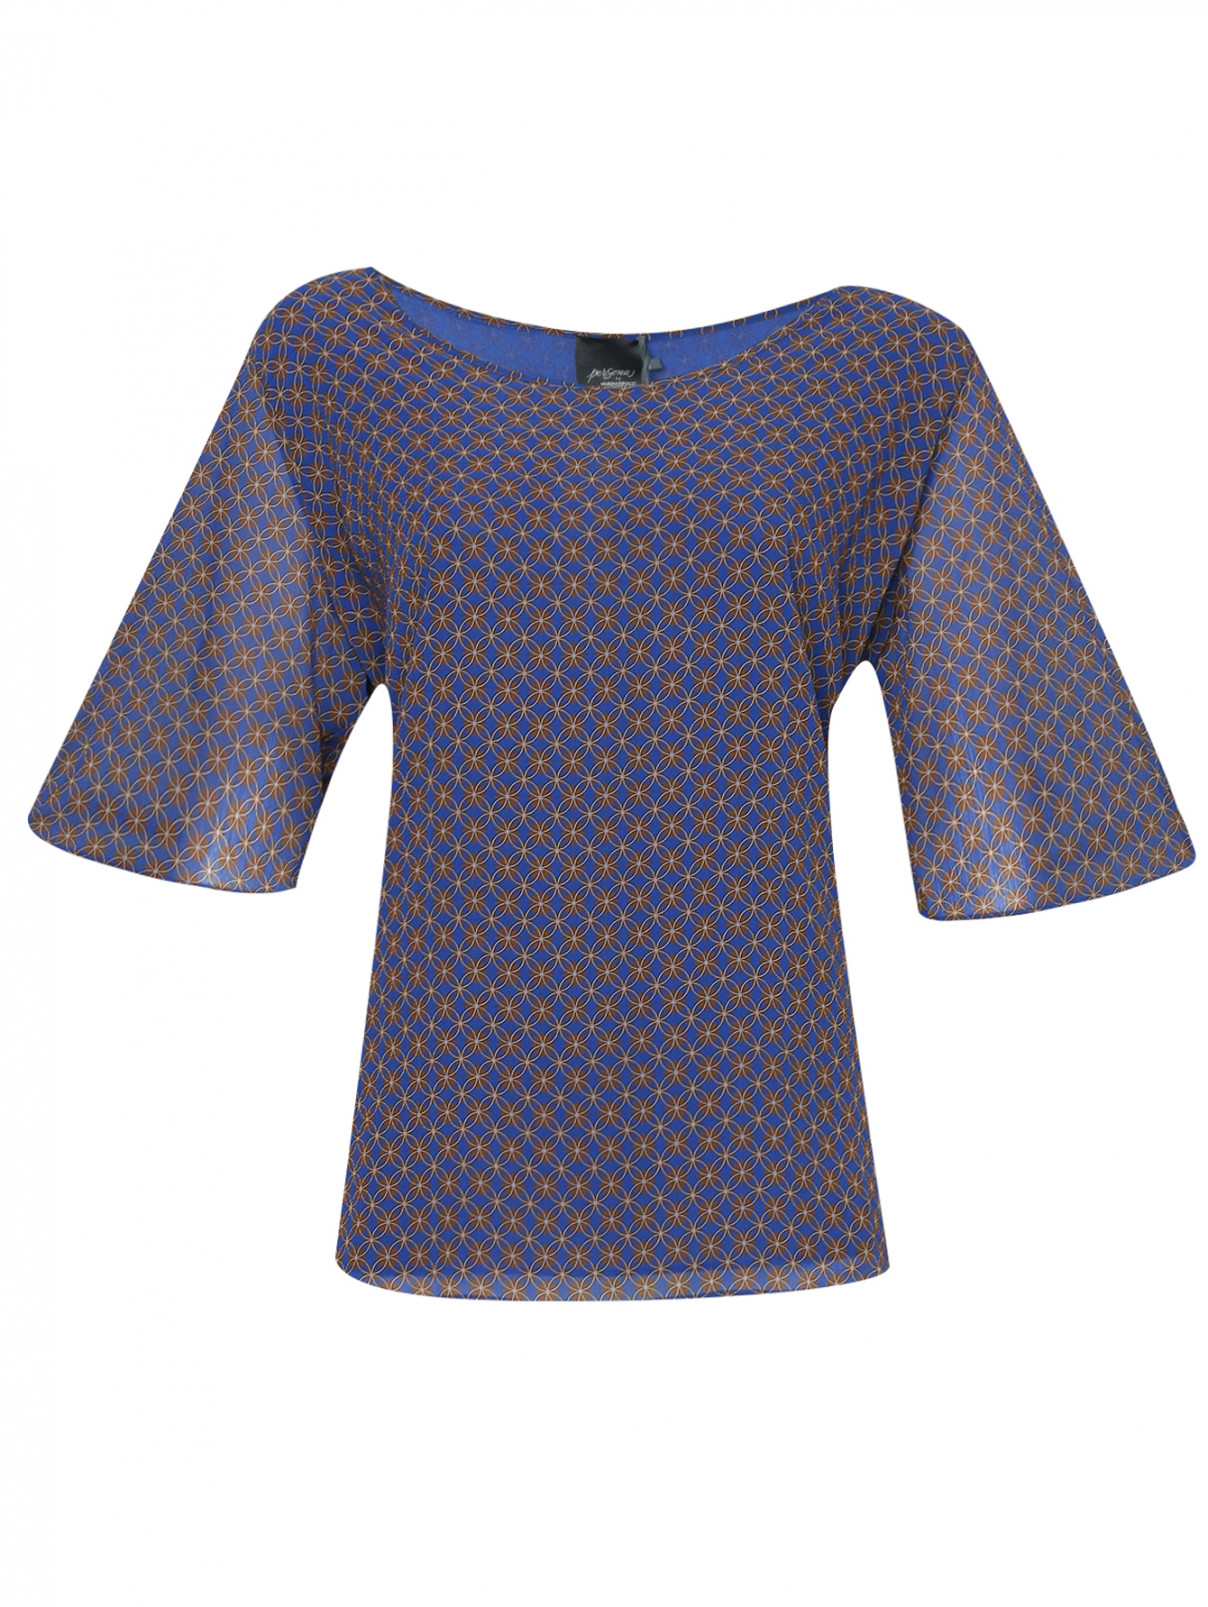 Блуза с узором Persona by Marina Rinaldi  –  Общий вид  – Цвет:  Синий